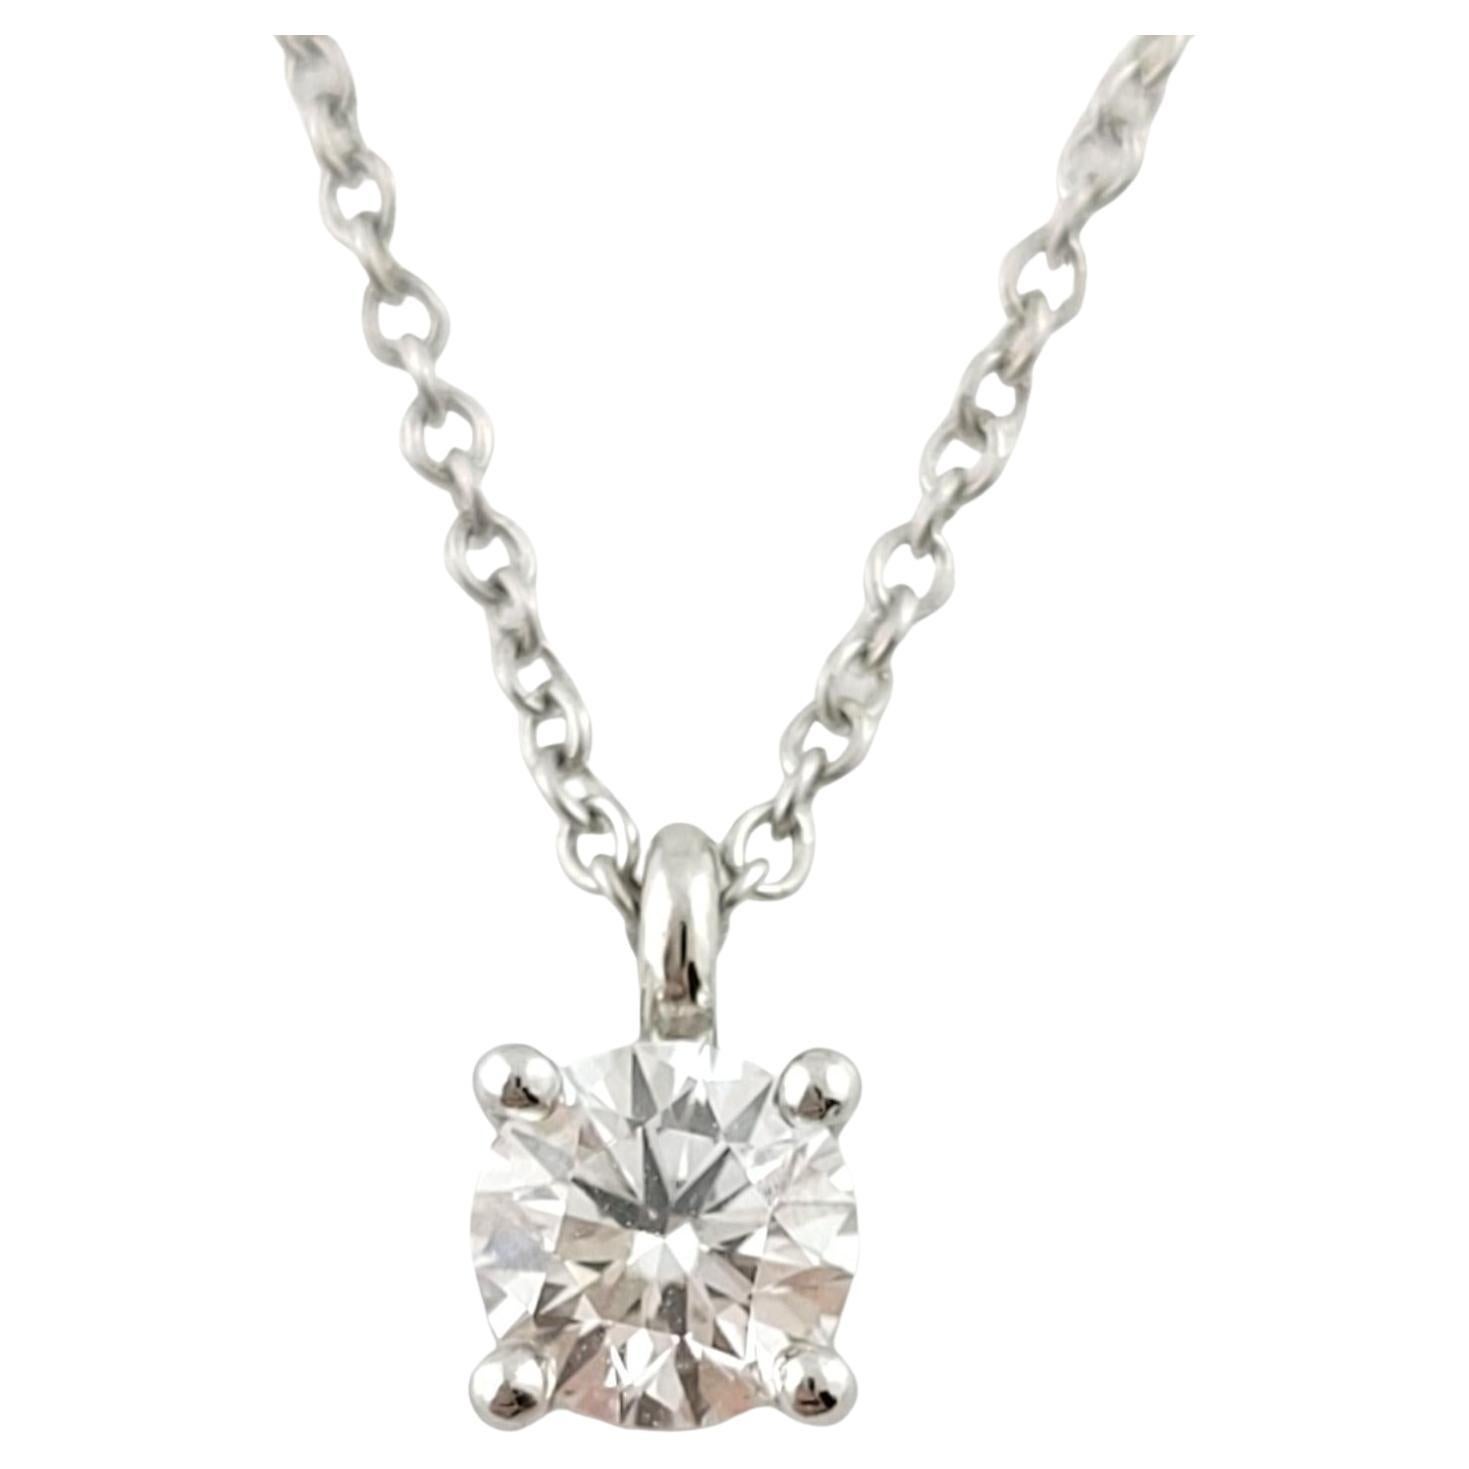 Tiffany & Co. Platinum Diamond Solitaire Pendant Necklace #15833